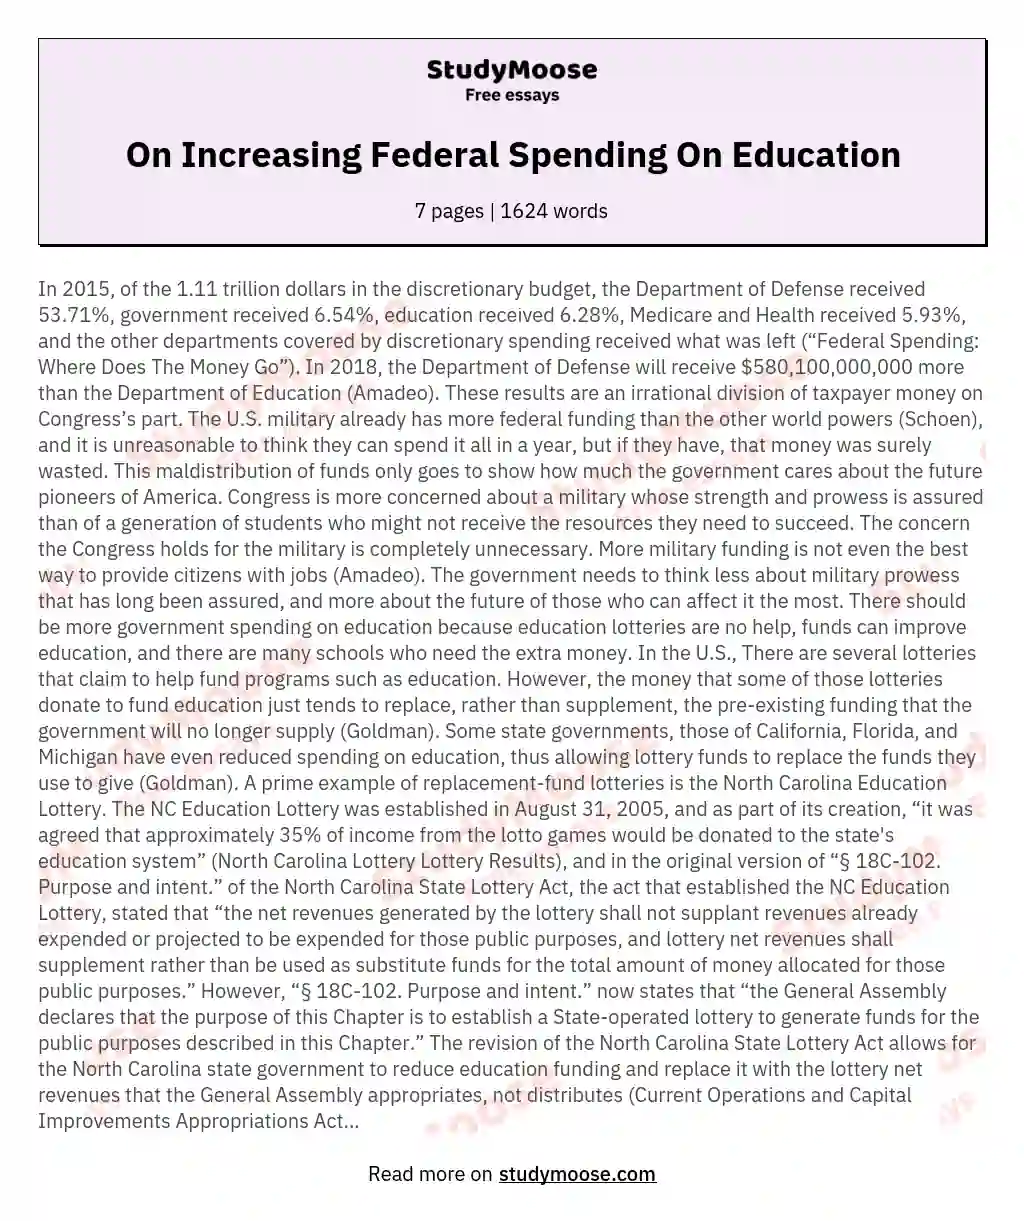 On Increasing Federal Spending On Education essay